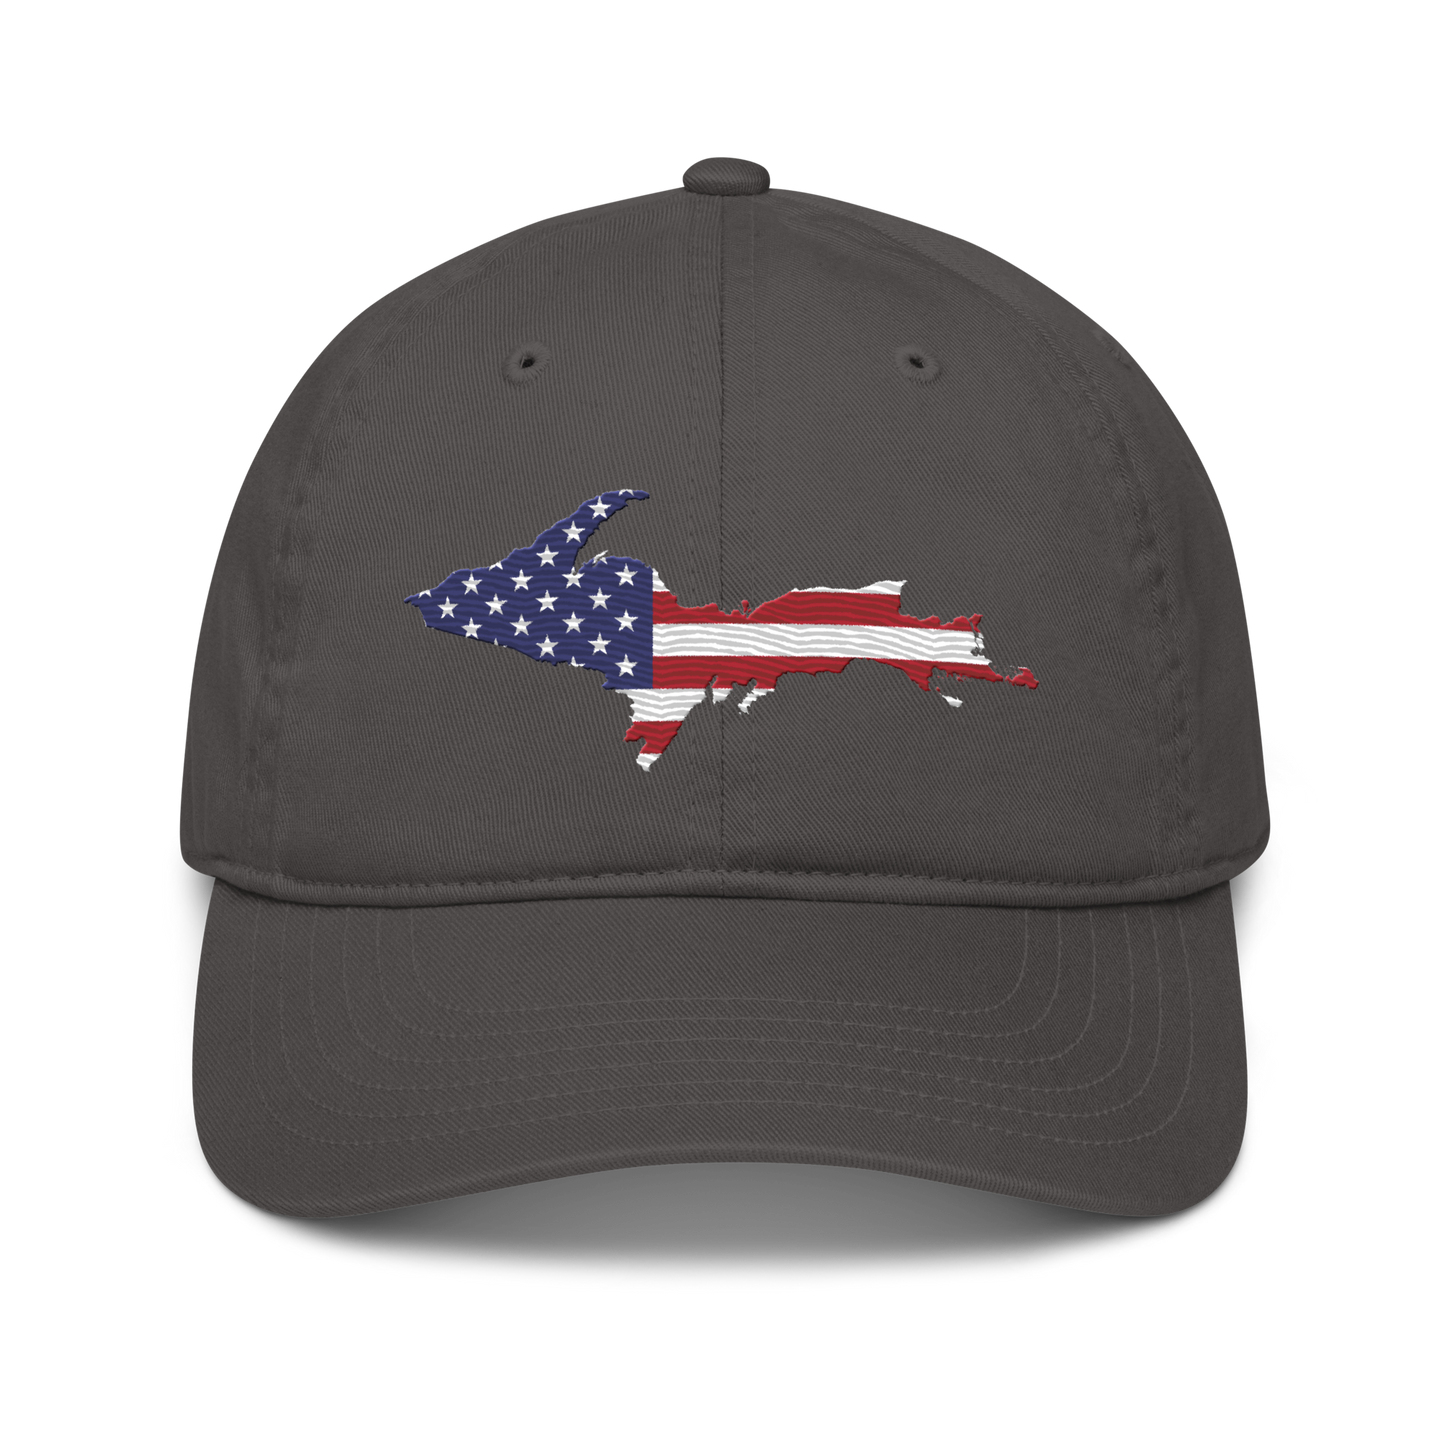 Michigan Upper Peninsula Classic Baseball Cap (Patriotic Edition)